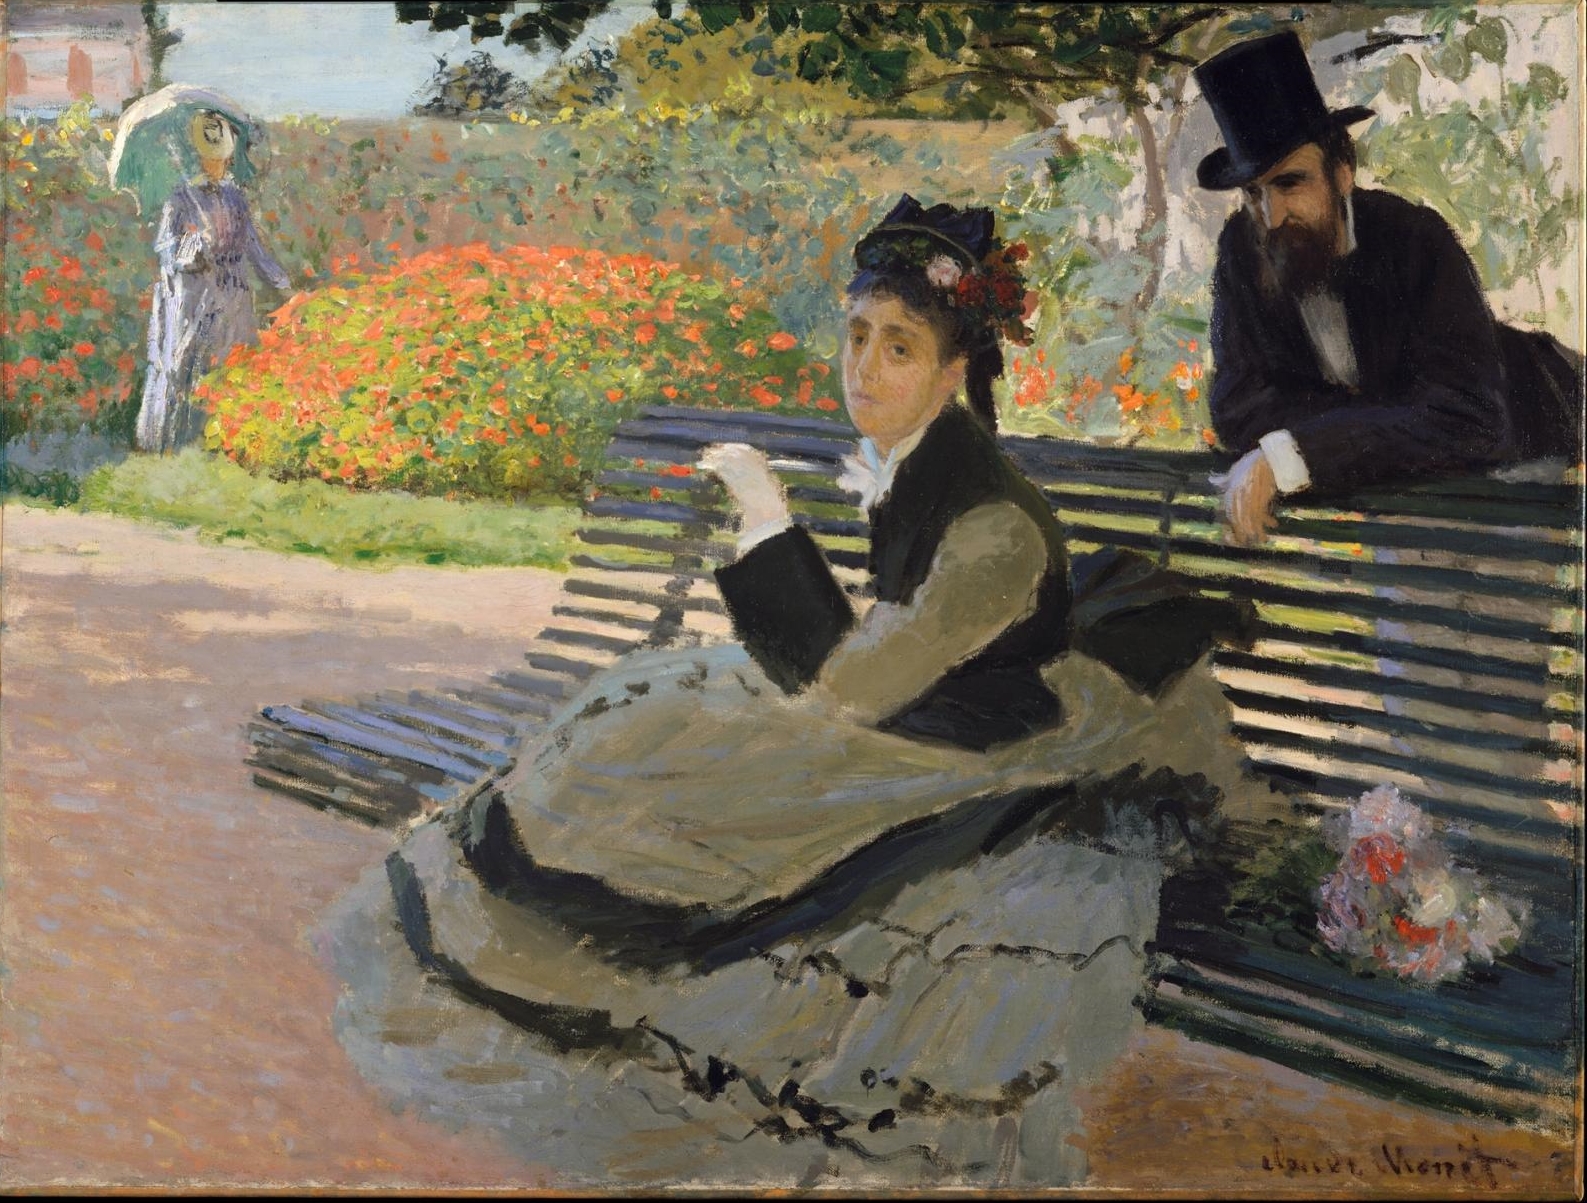 Claude+Monet-1840-1926 (170).jpg